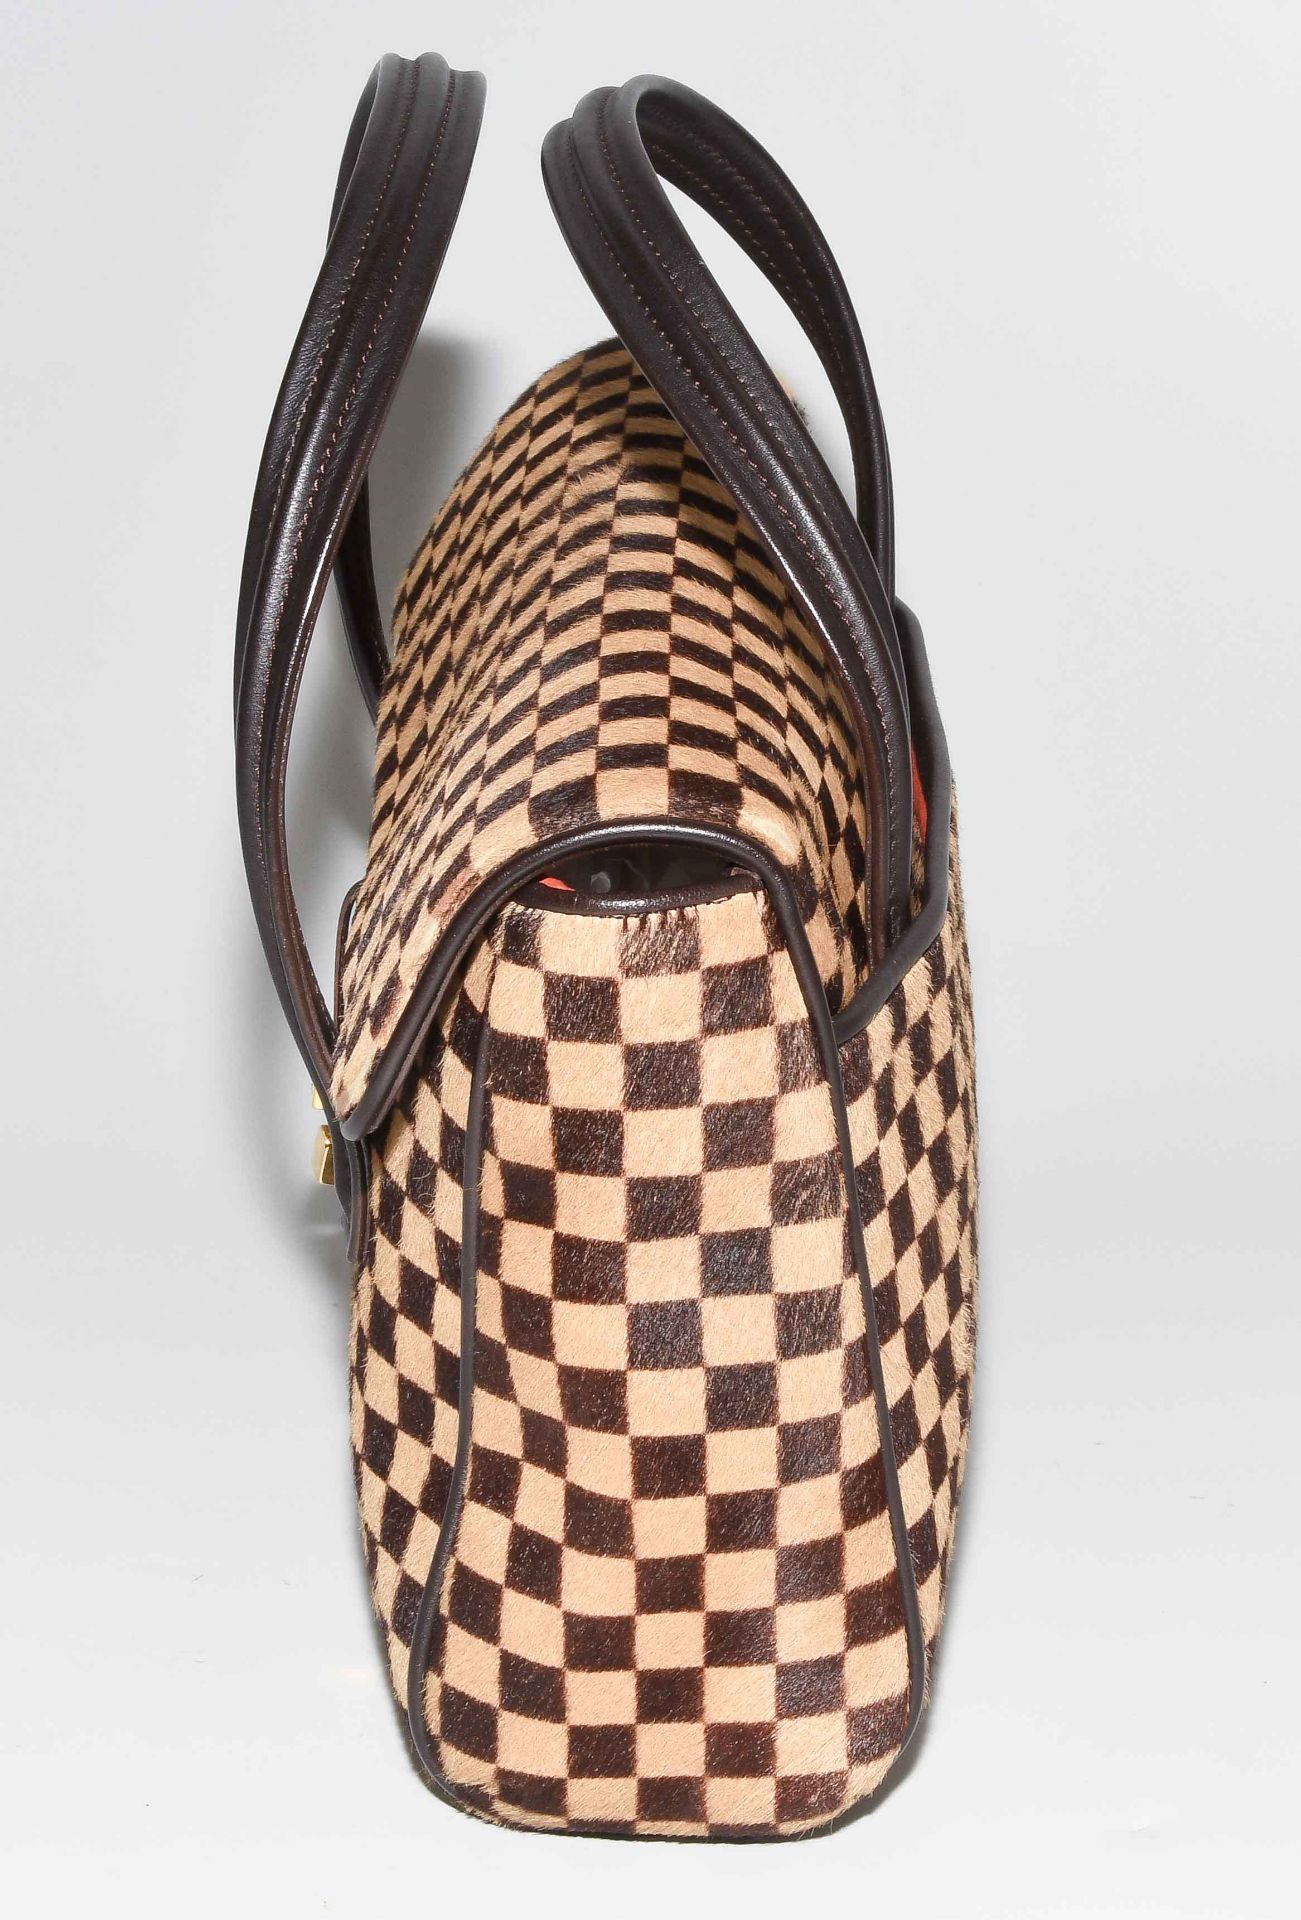 Louis Vuitton, Handtasche "Lionne" - Image 3 of 14